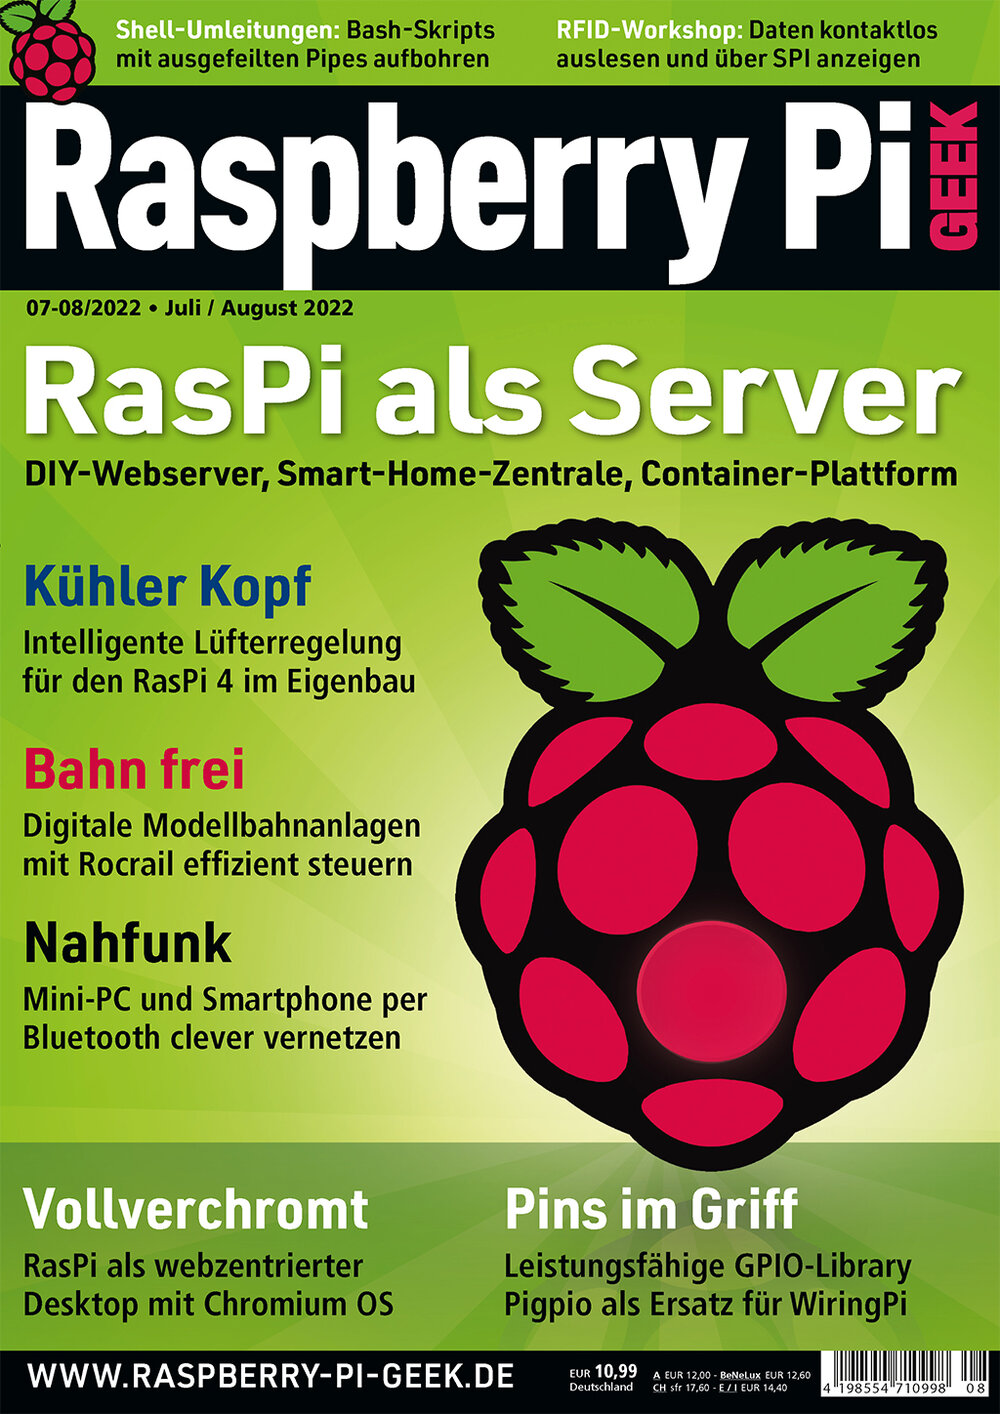 Raspberry Pi Geek Digital Jahresabo-Upgrade